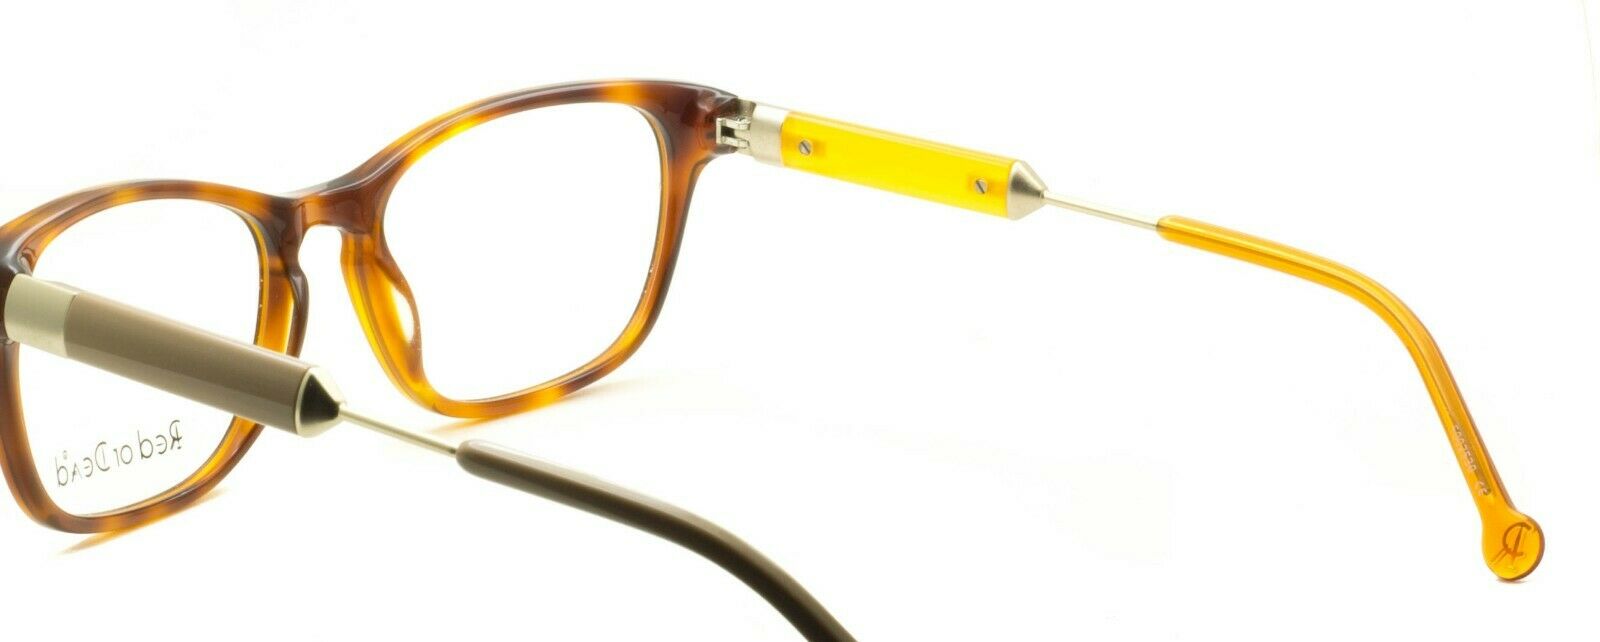 Red or Dead 124 30727984 54mm FRAMES Glasses RX Optical Eyewear Eyeglasses - New